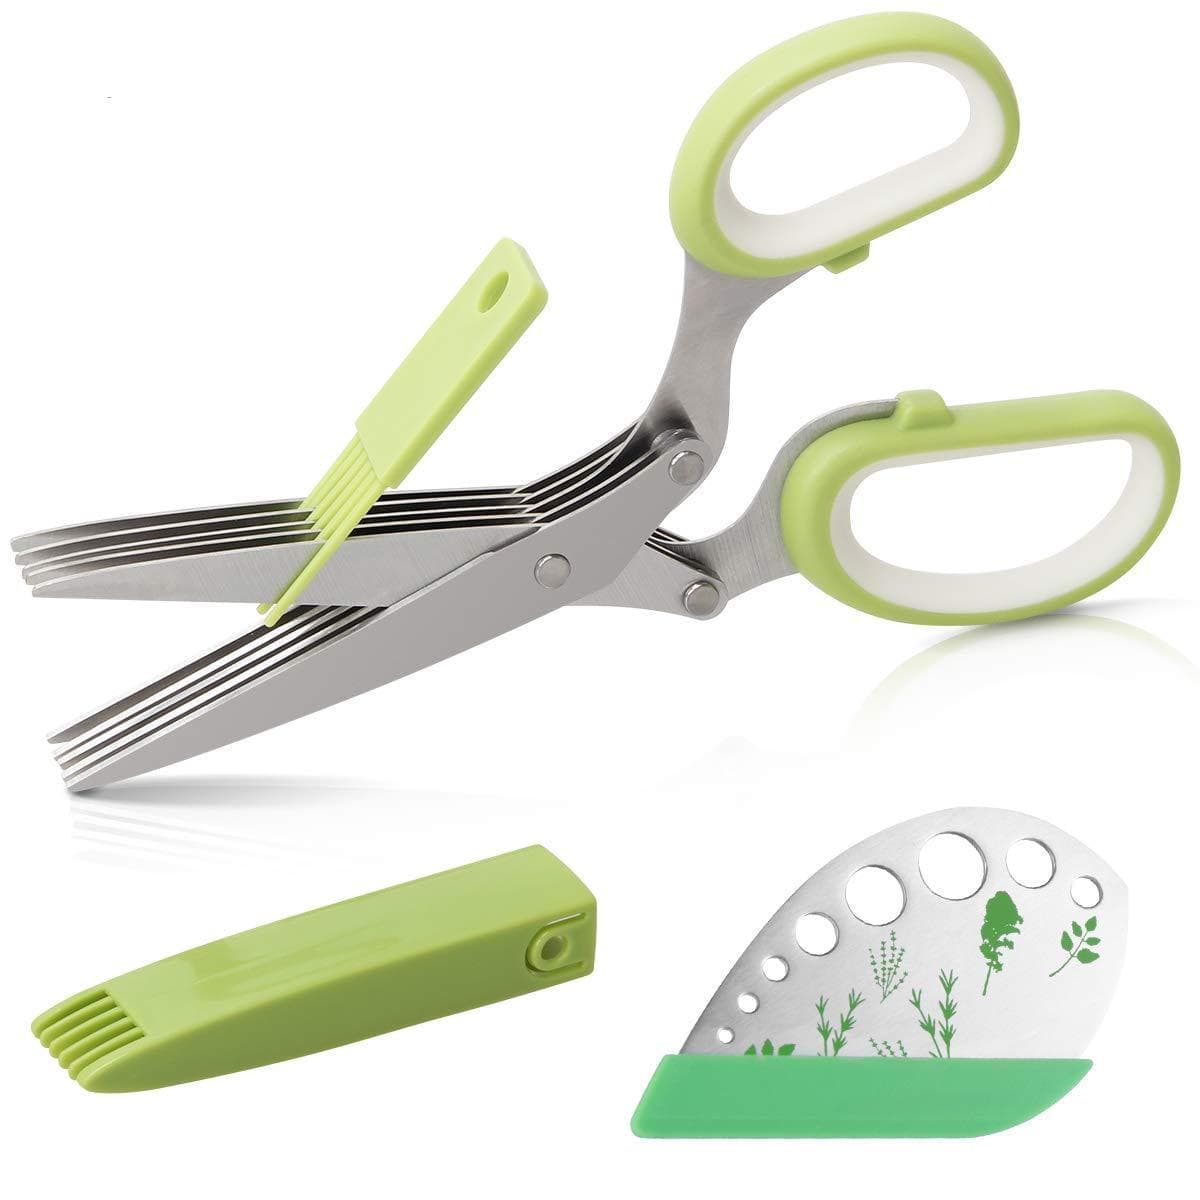 Herb Scissors, X-Chef Multipurpose Kitchen Scissors 5 Blades Stainless